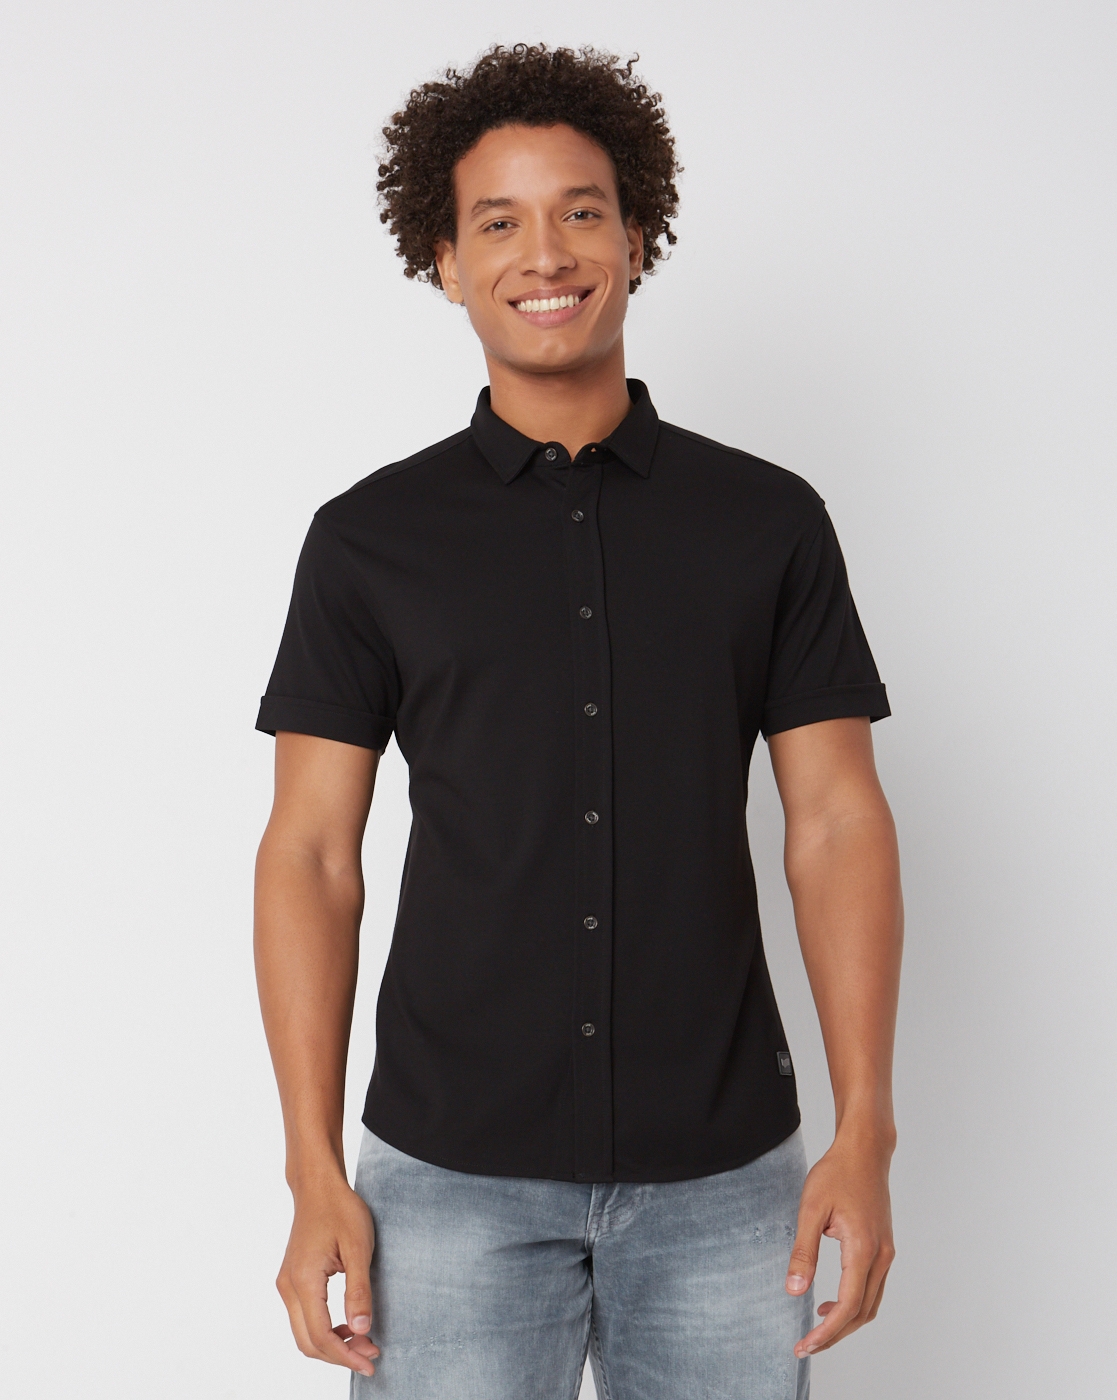 GAS | Slim Fit Half Sleeve Solid Scuba Shirts